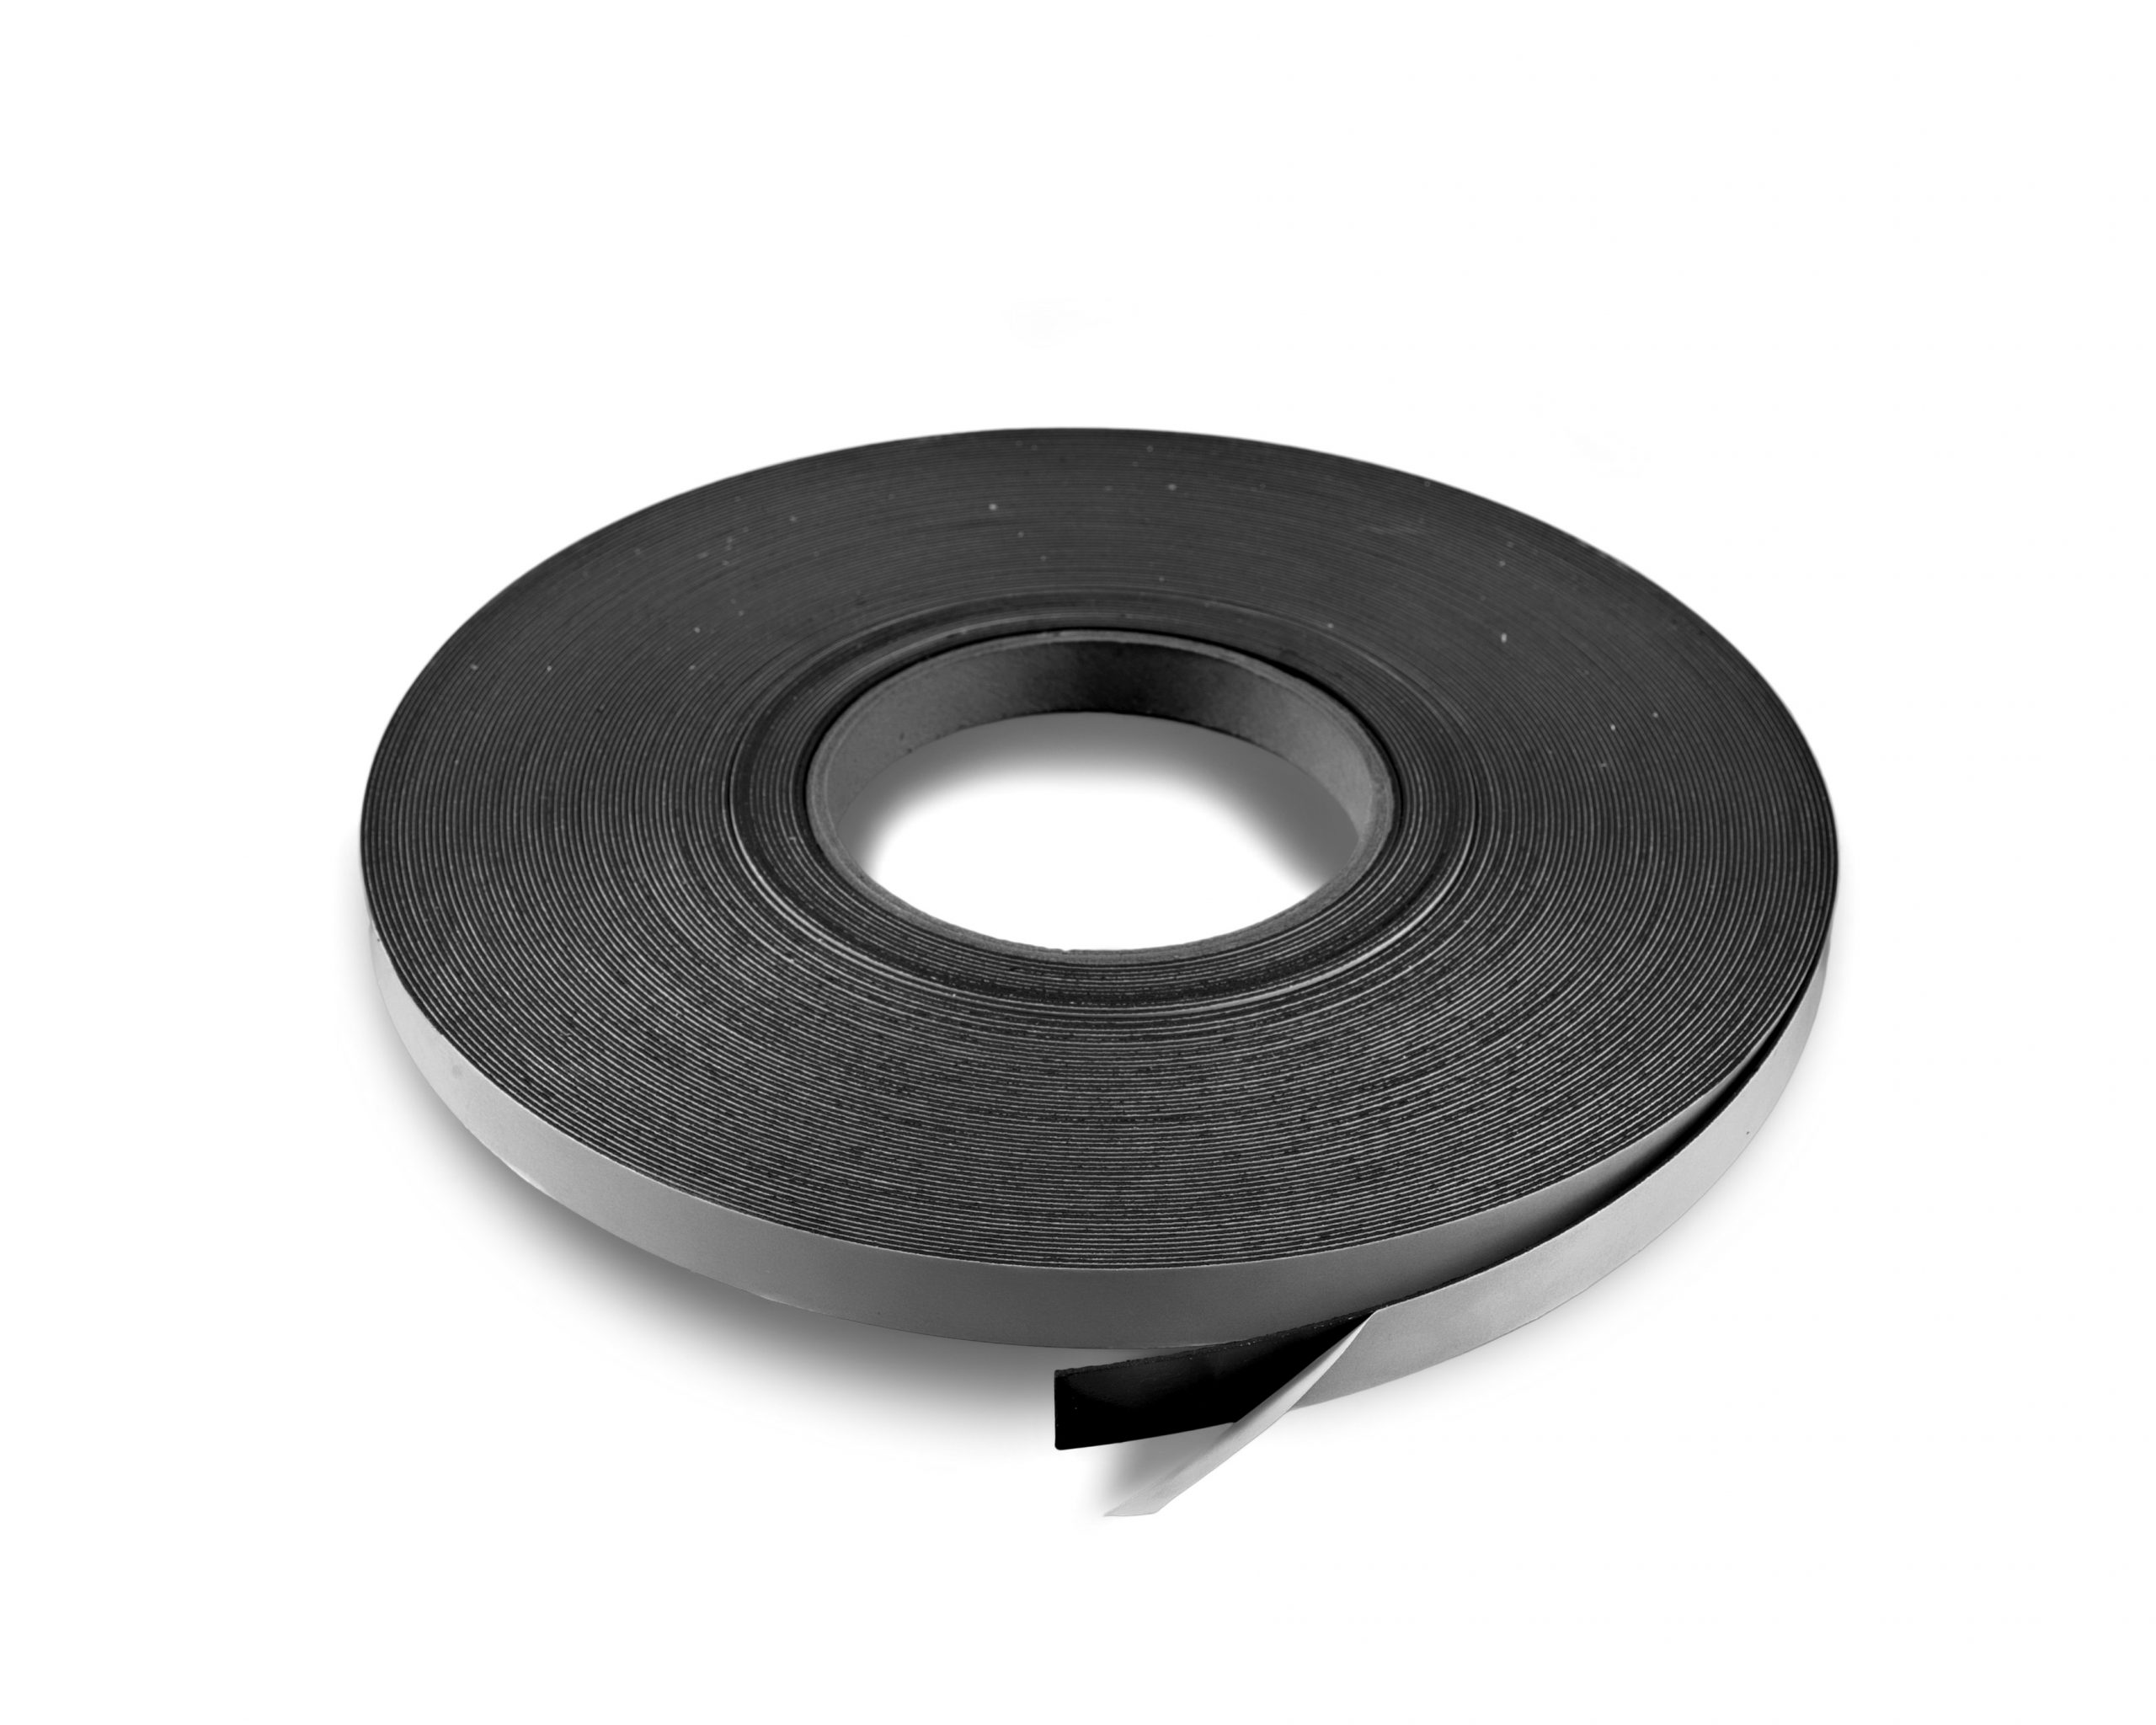 .5 Premium Adhesive Magnet Tape 120 mil Roll